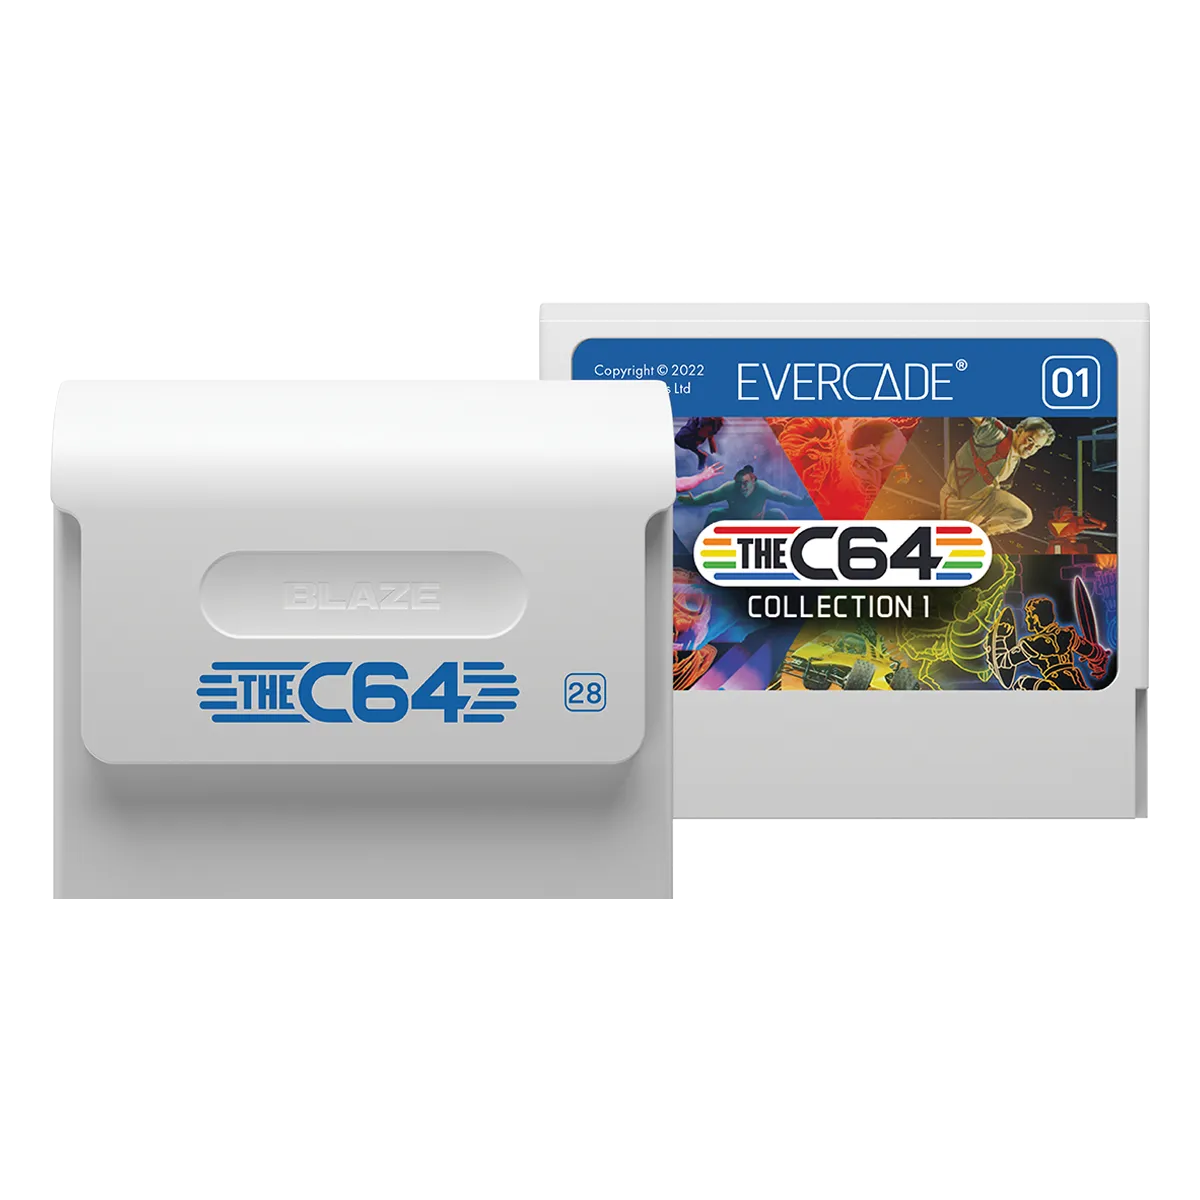 Blaze Evercade The C64 Collection 1 Cartridge 1 - Blue Collection Thumbnail 2